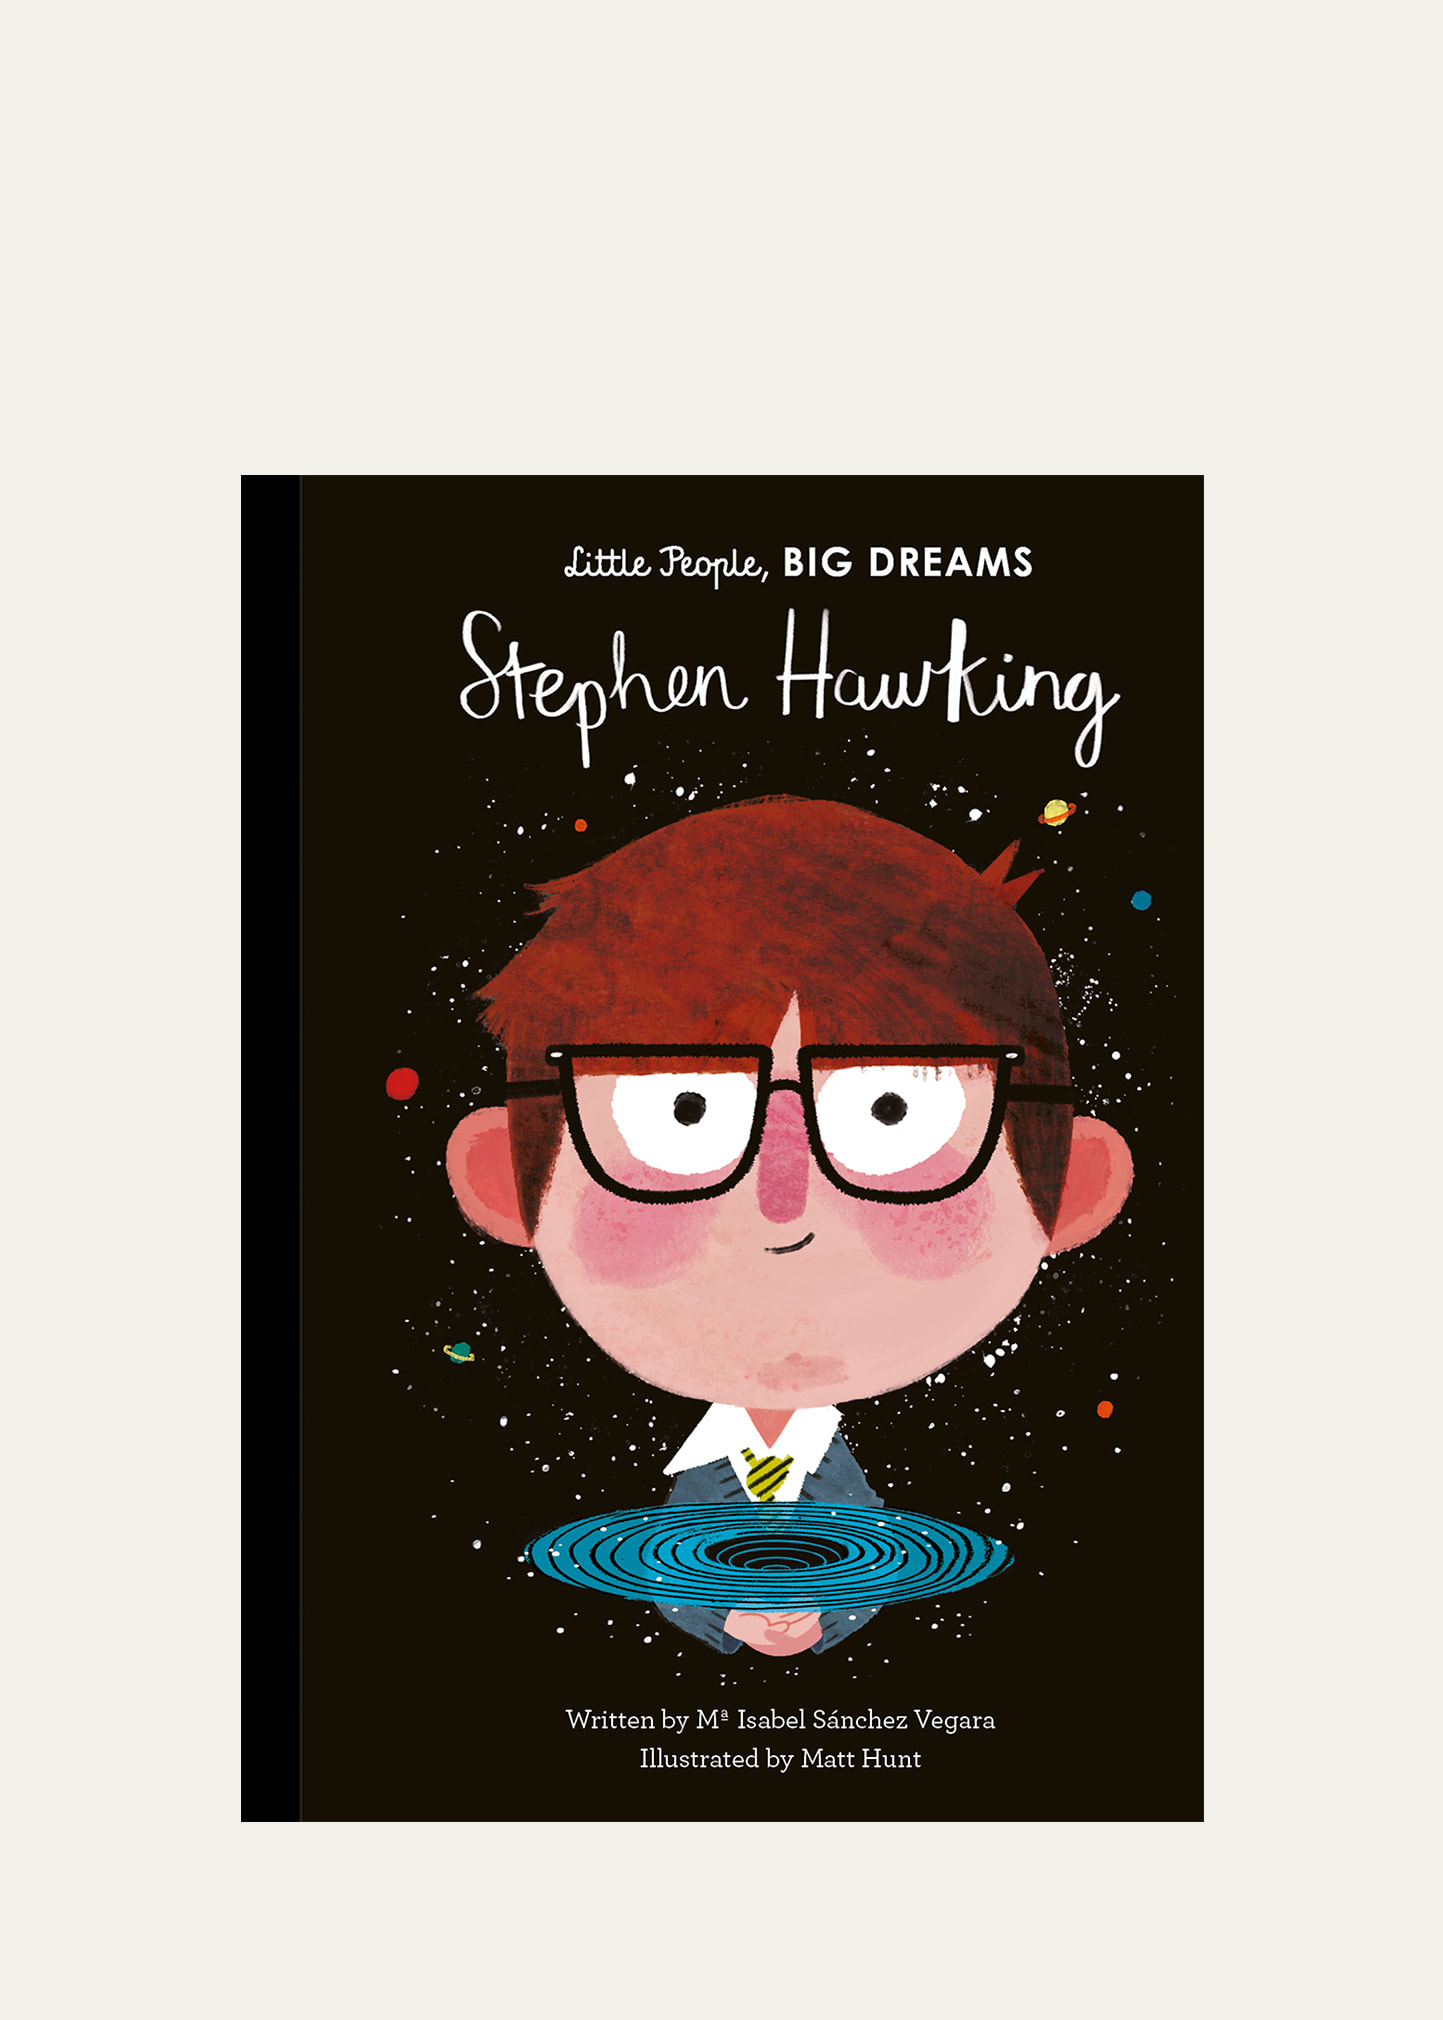 "Stephen Hawking" Book by Maria Isabel Sanchez Vegara and Matt Hunt